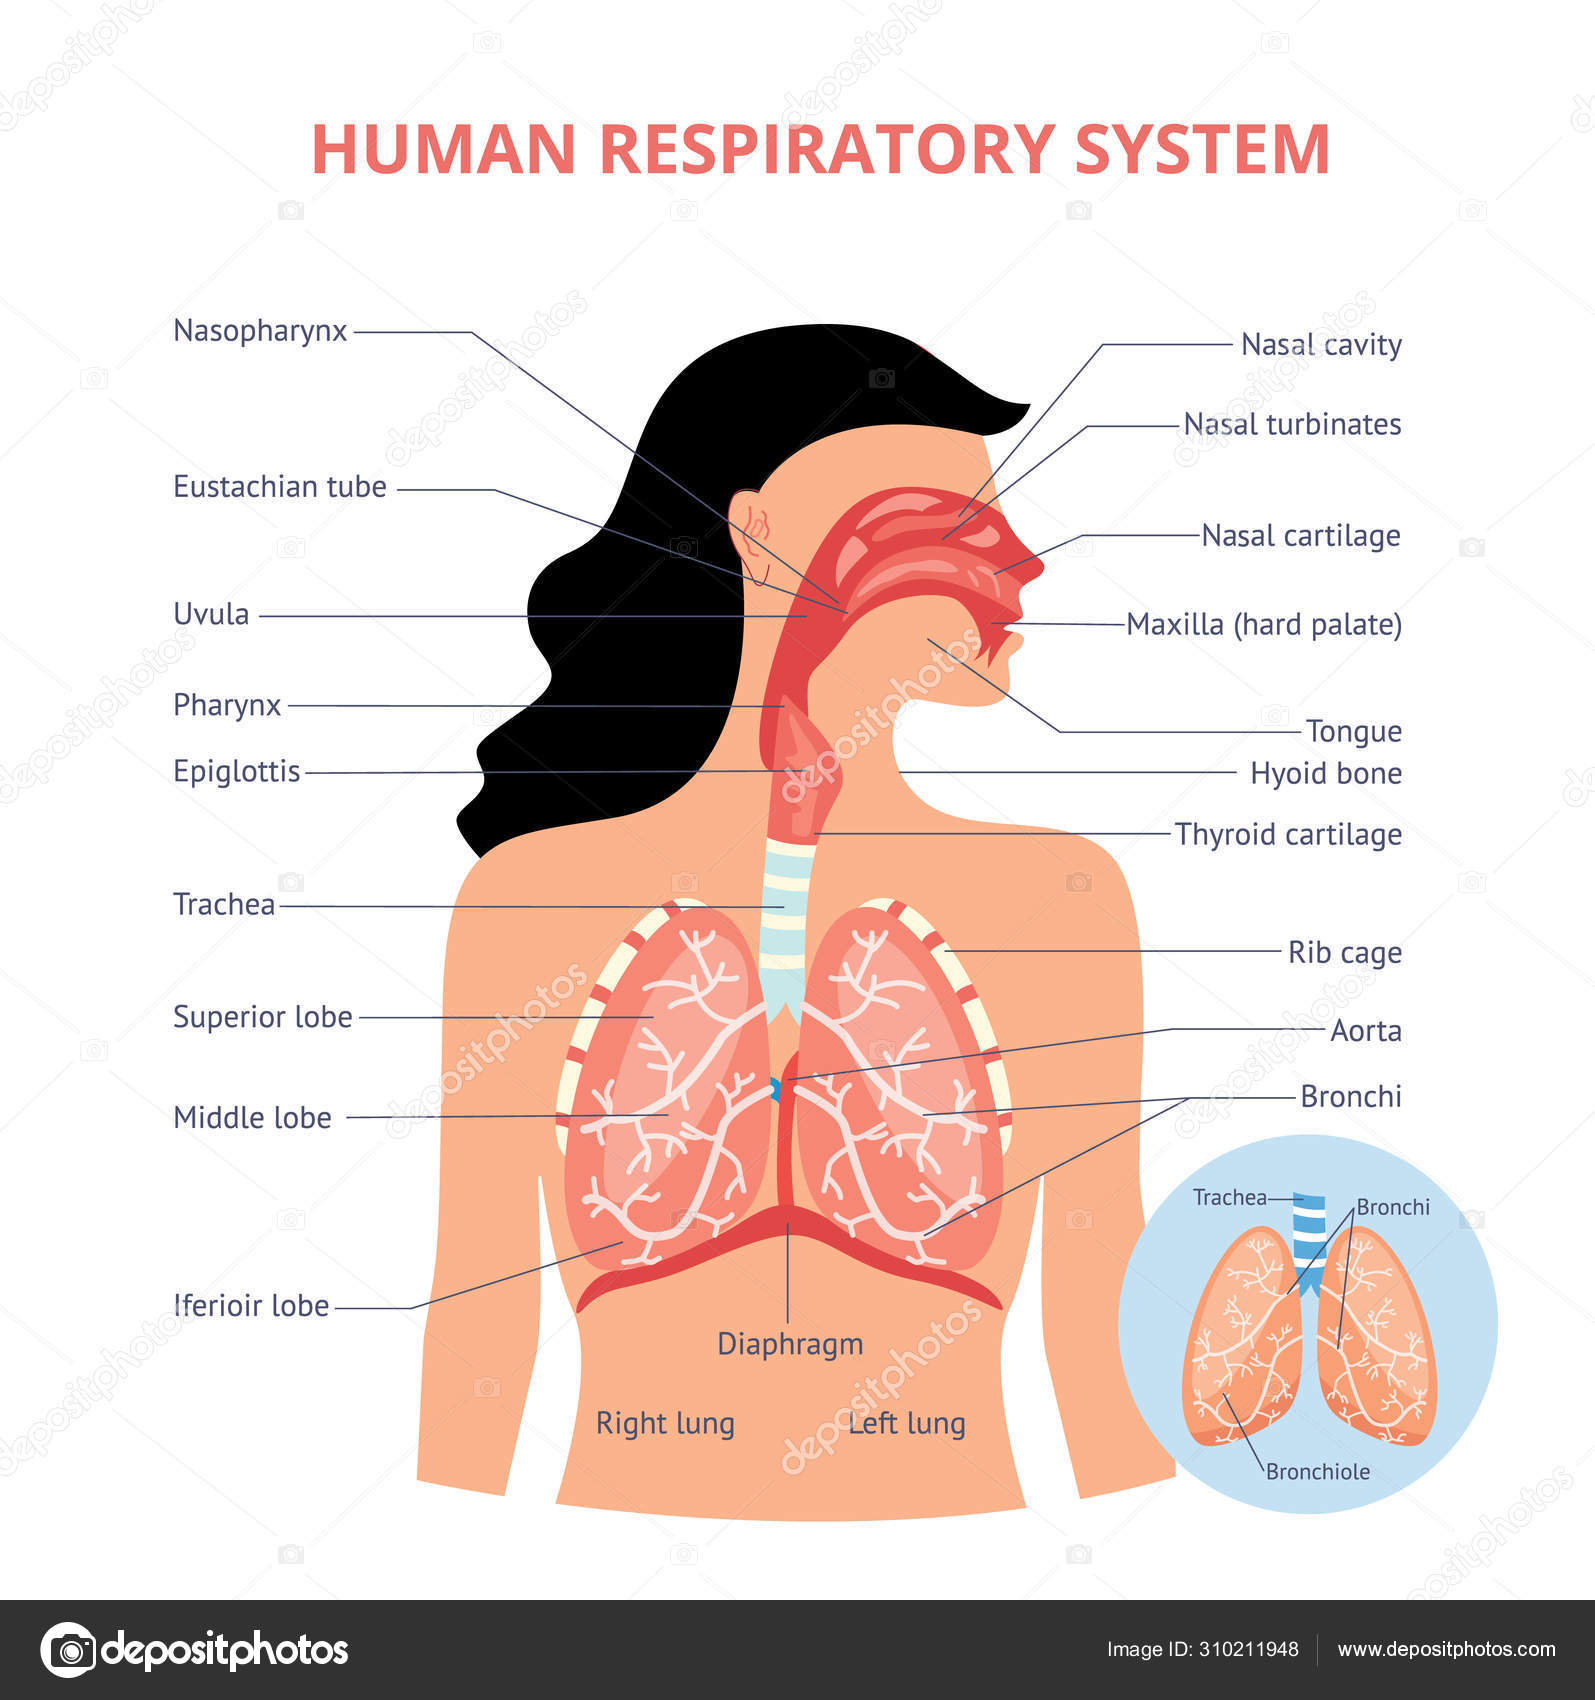 Anatomie du système respiratoire - Organes corps humain